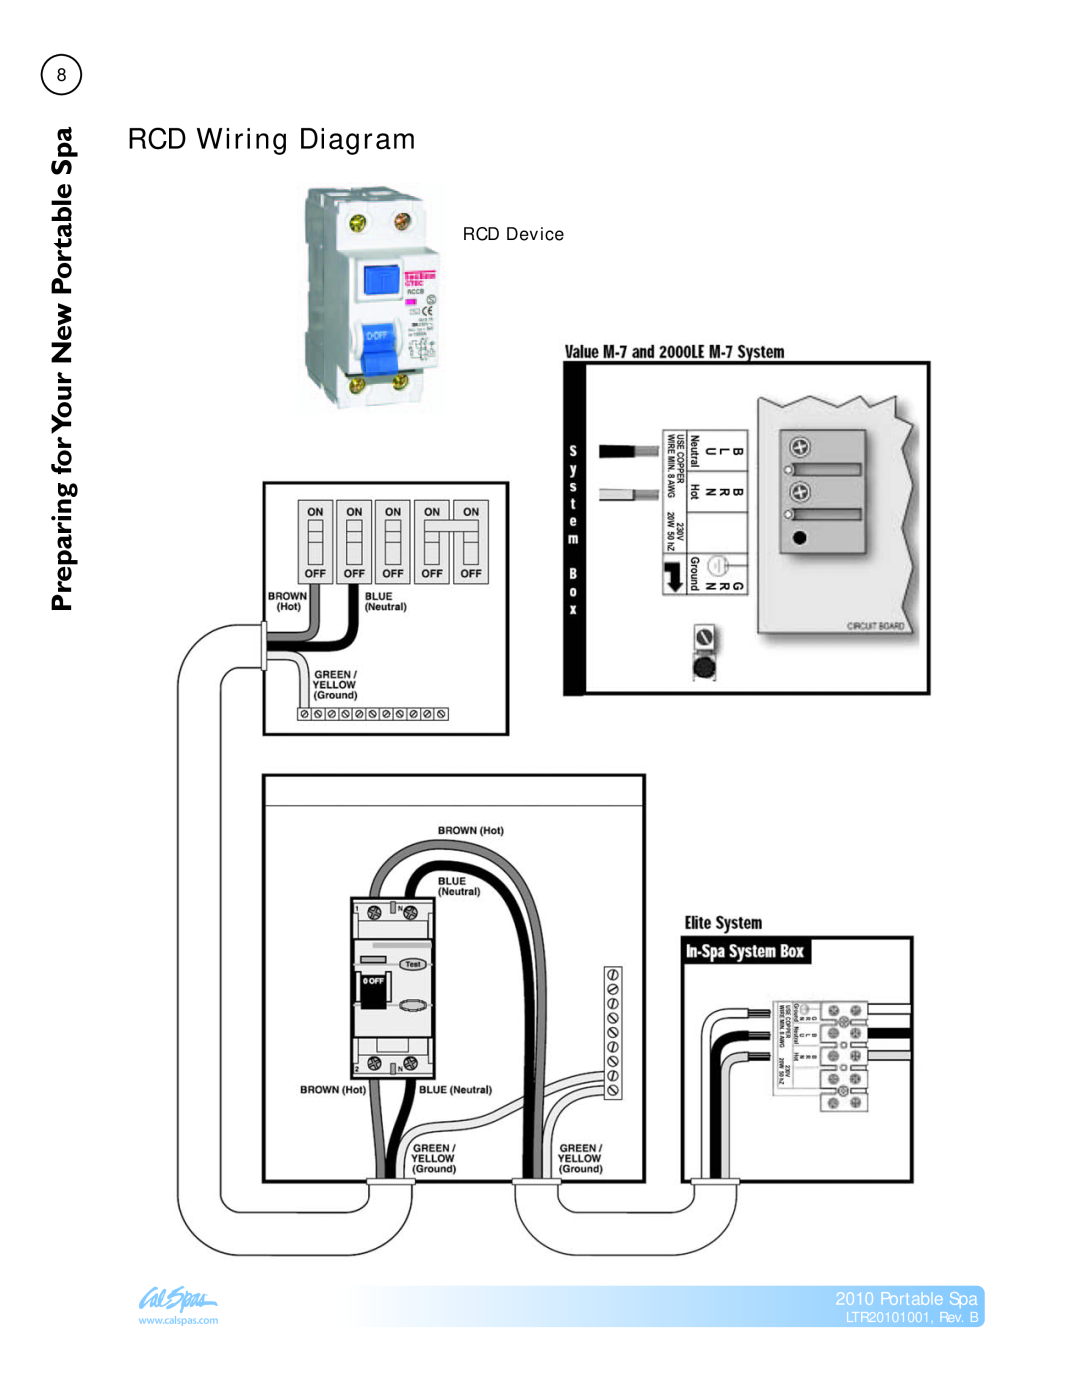 Cal Spas manual RCD Wiring Diagram, Preparing forYour New Portable Spa, LTR20101001, Rev. B 